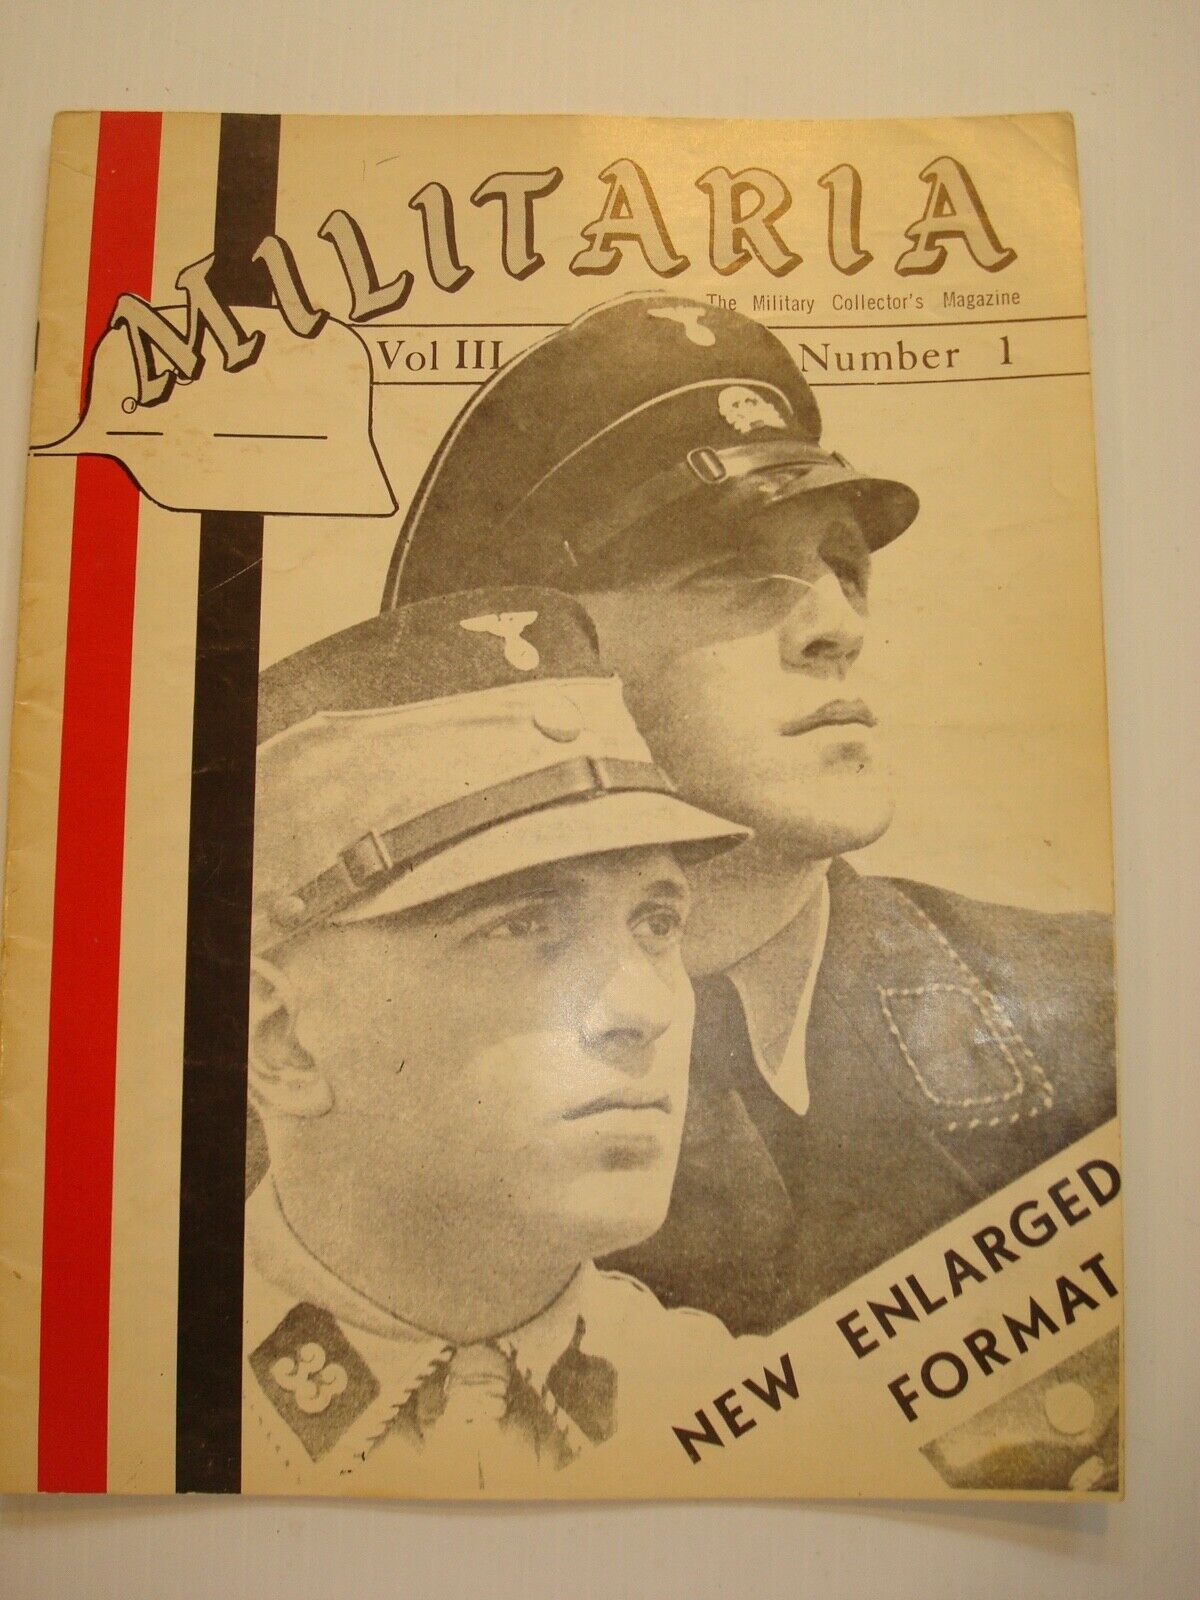 Militaria: The Military Collector's Magazine.